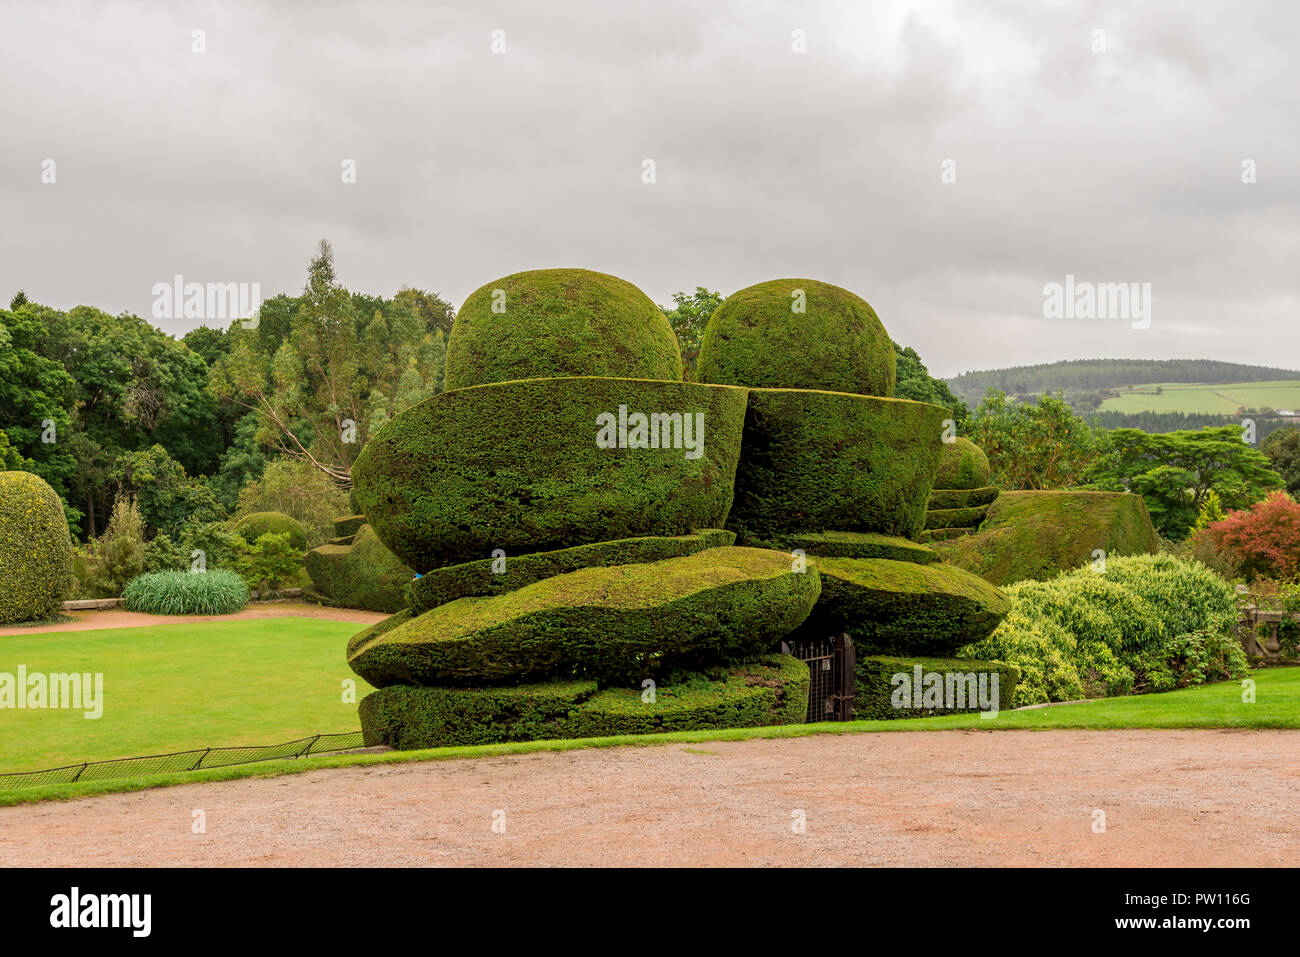 Large plants cut in a decorative shape by a gardener, Crathes Castle, Aberdeenshire, Scotland Stock Photo